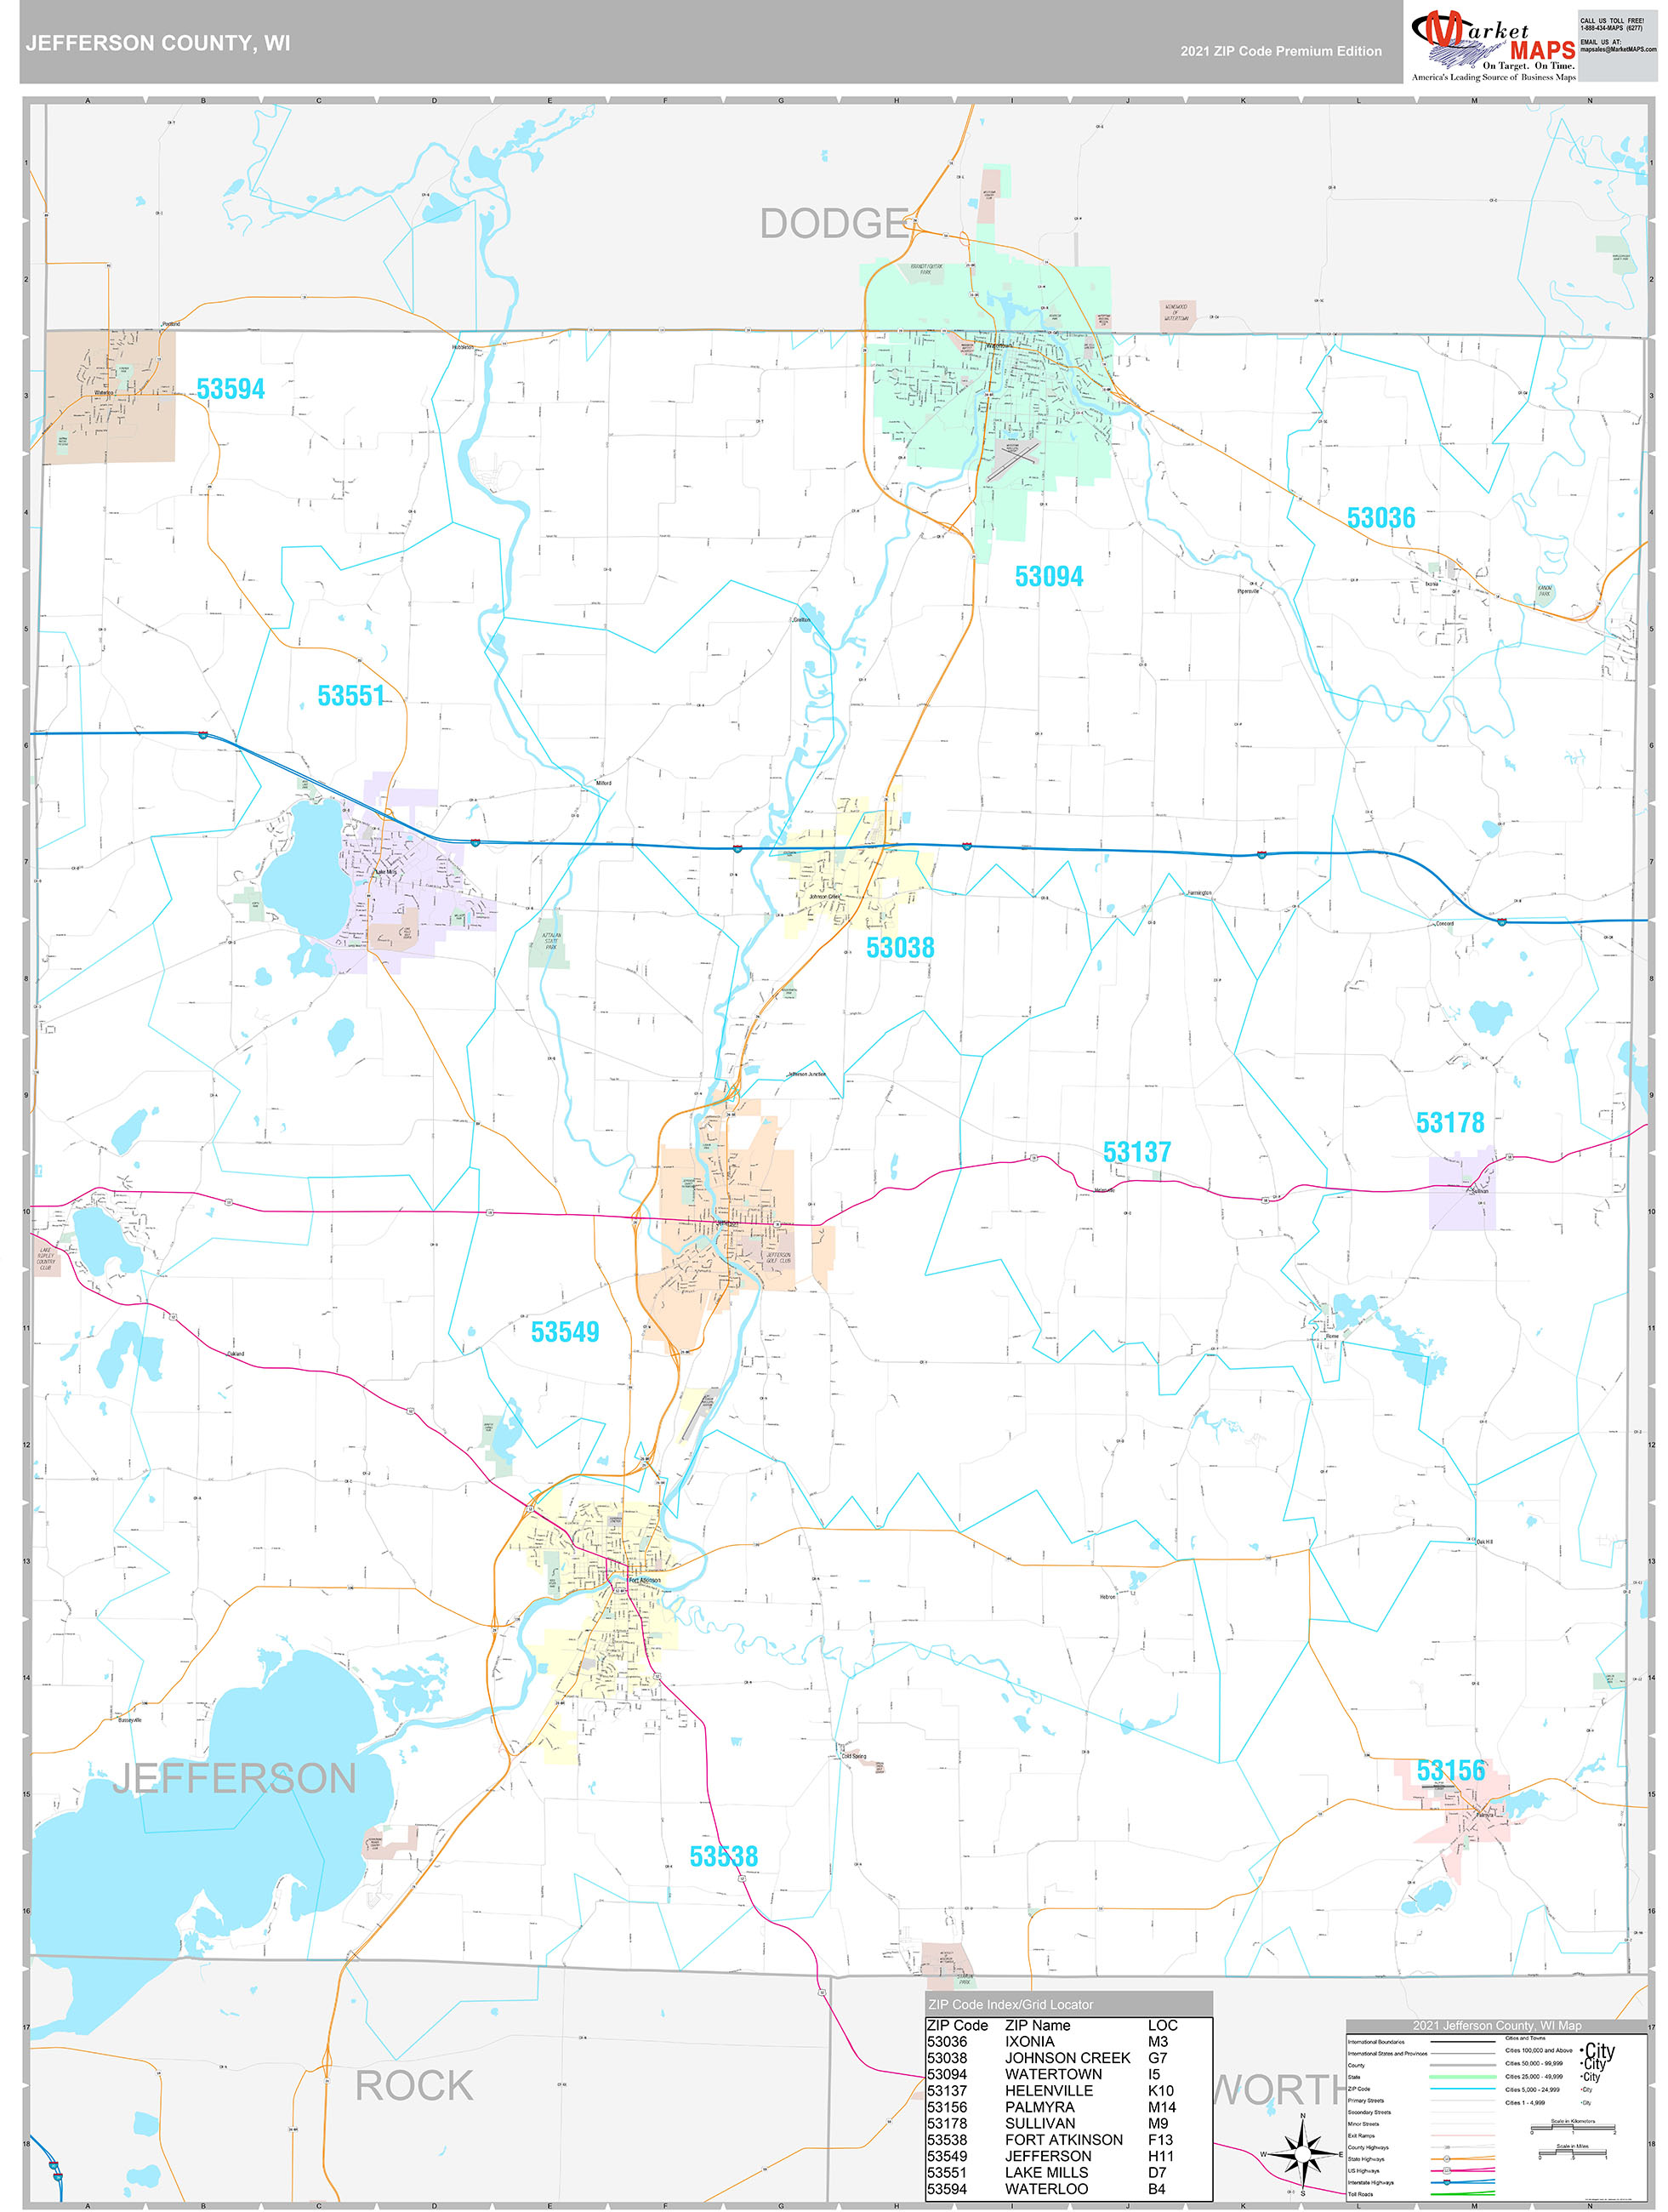 Jefferson County, WI Wall Map Premium Style by MarketMAPS